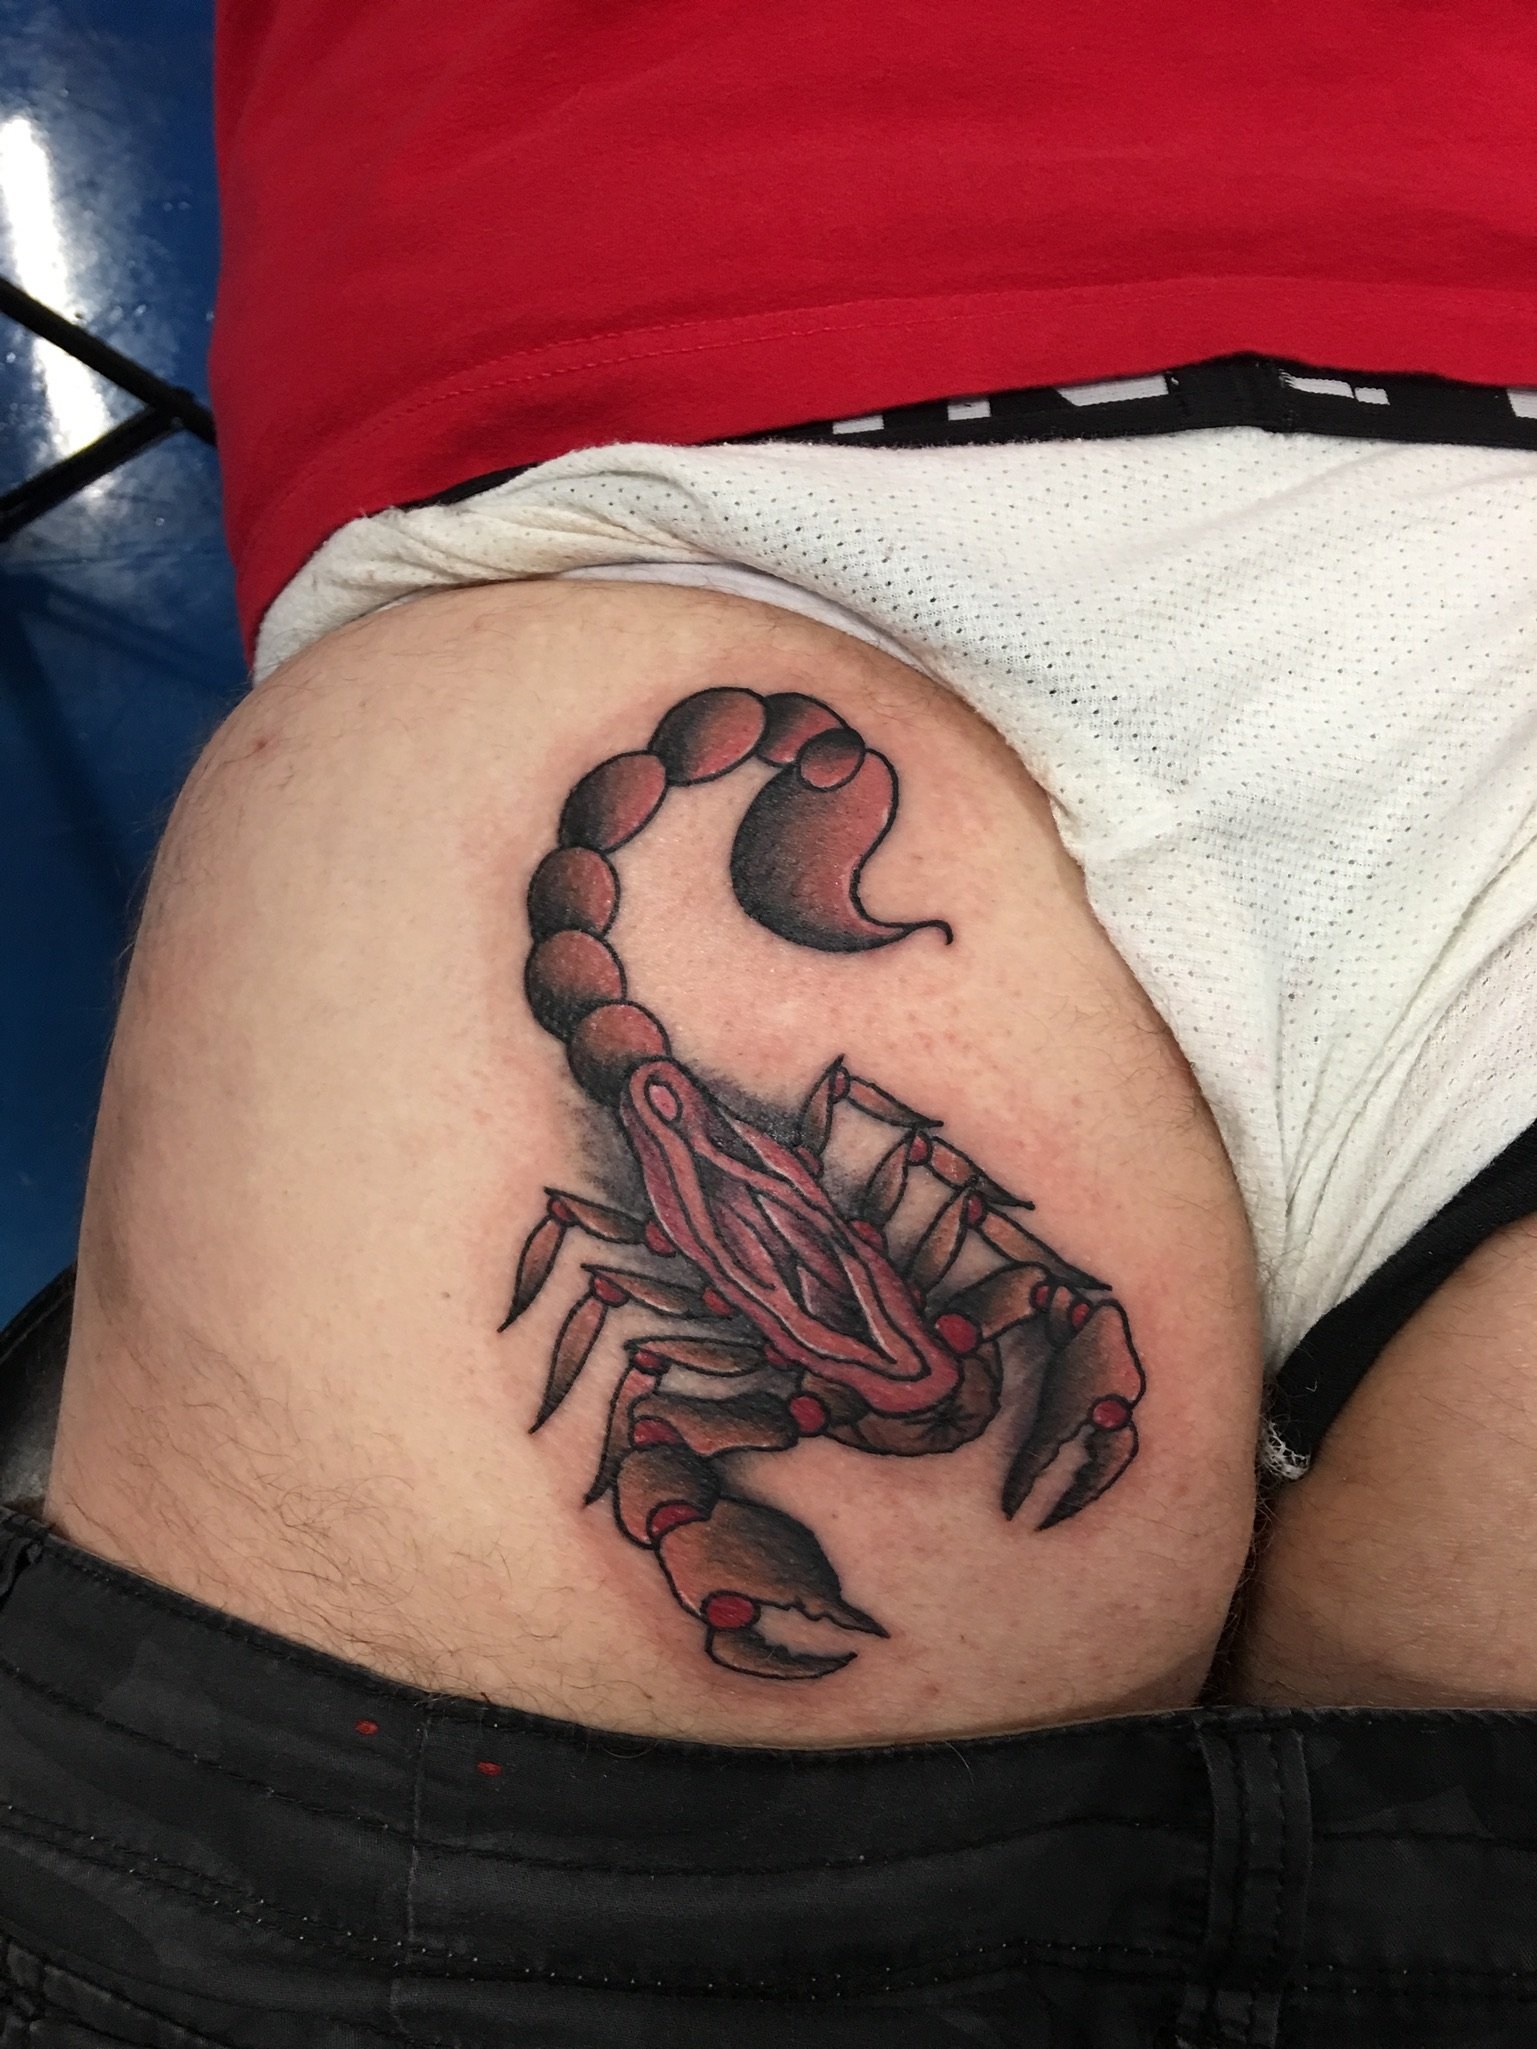 Porn in Krasnoyarsk with A Scorpion Tattoo (18 photos)